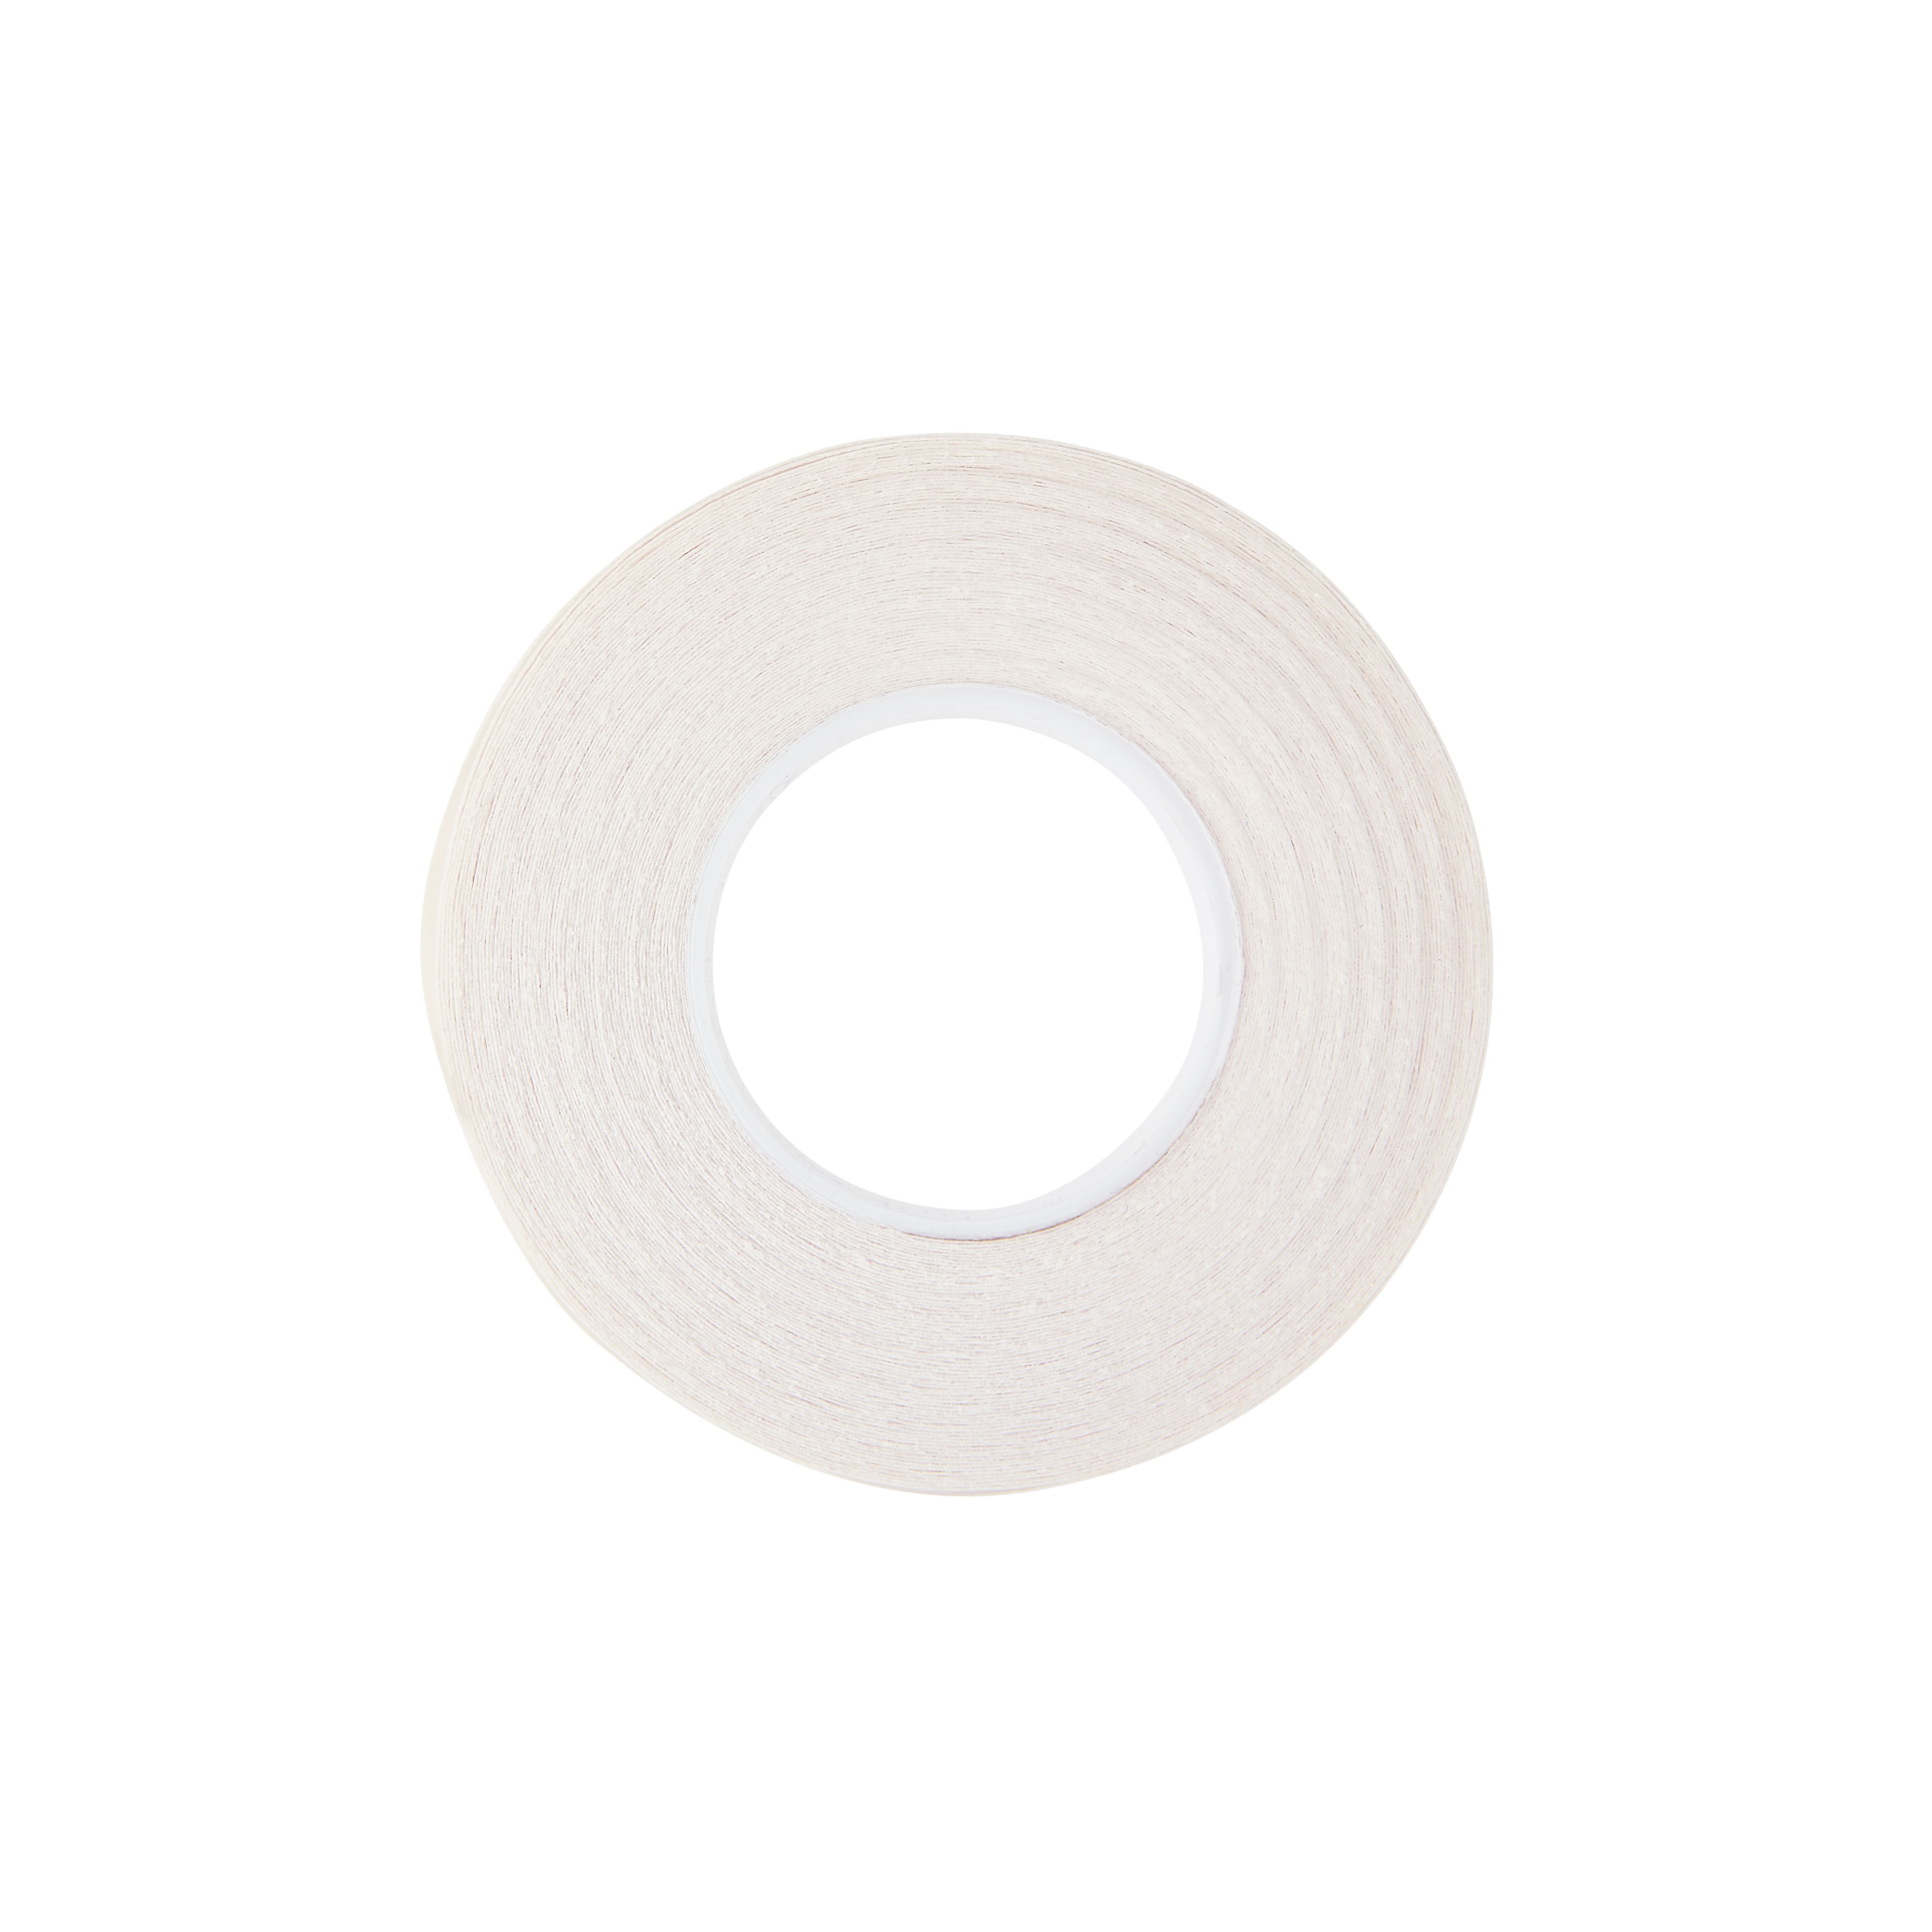 Therm O Web 3540 Heat and Bond ULTRA Soft Stretch Fabric Adhesive